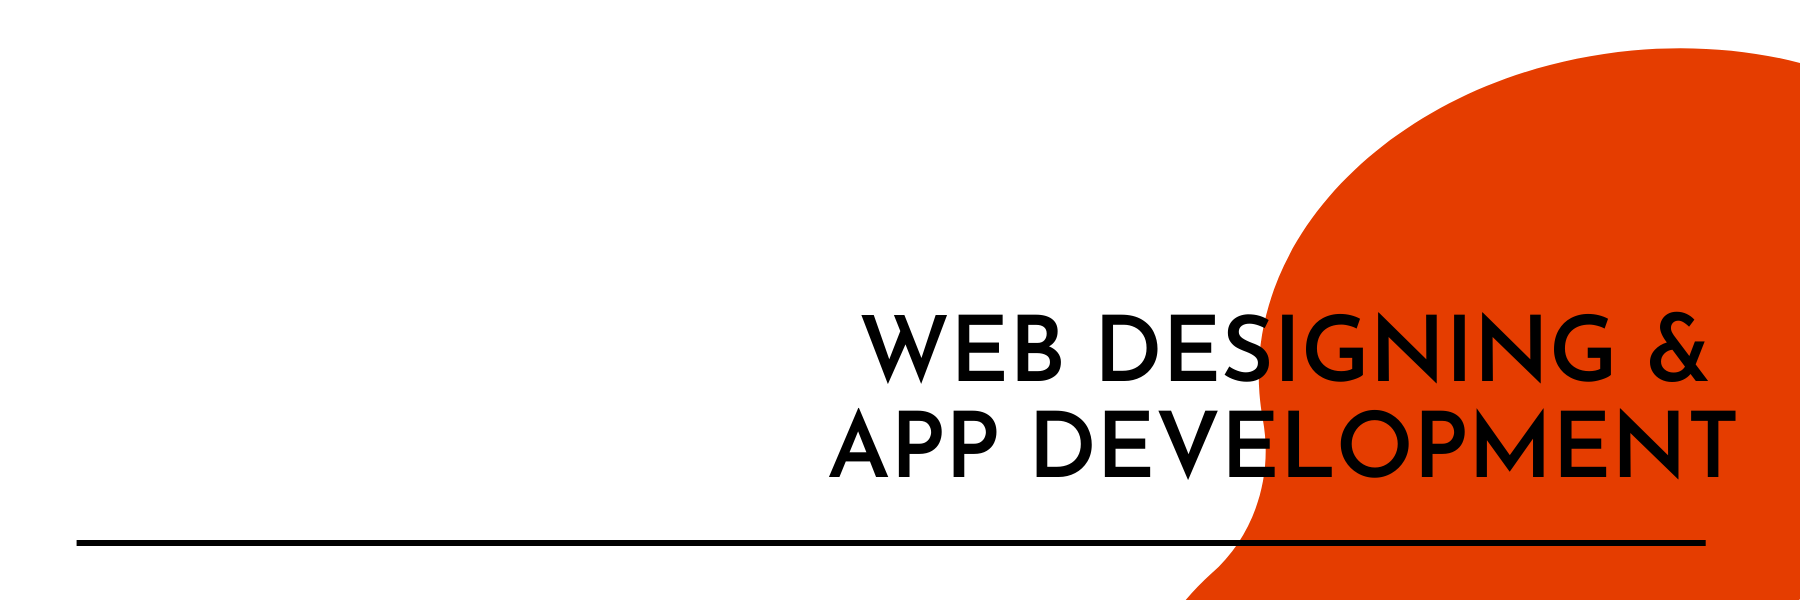 web-designing-and-app-development